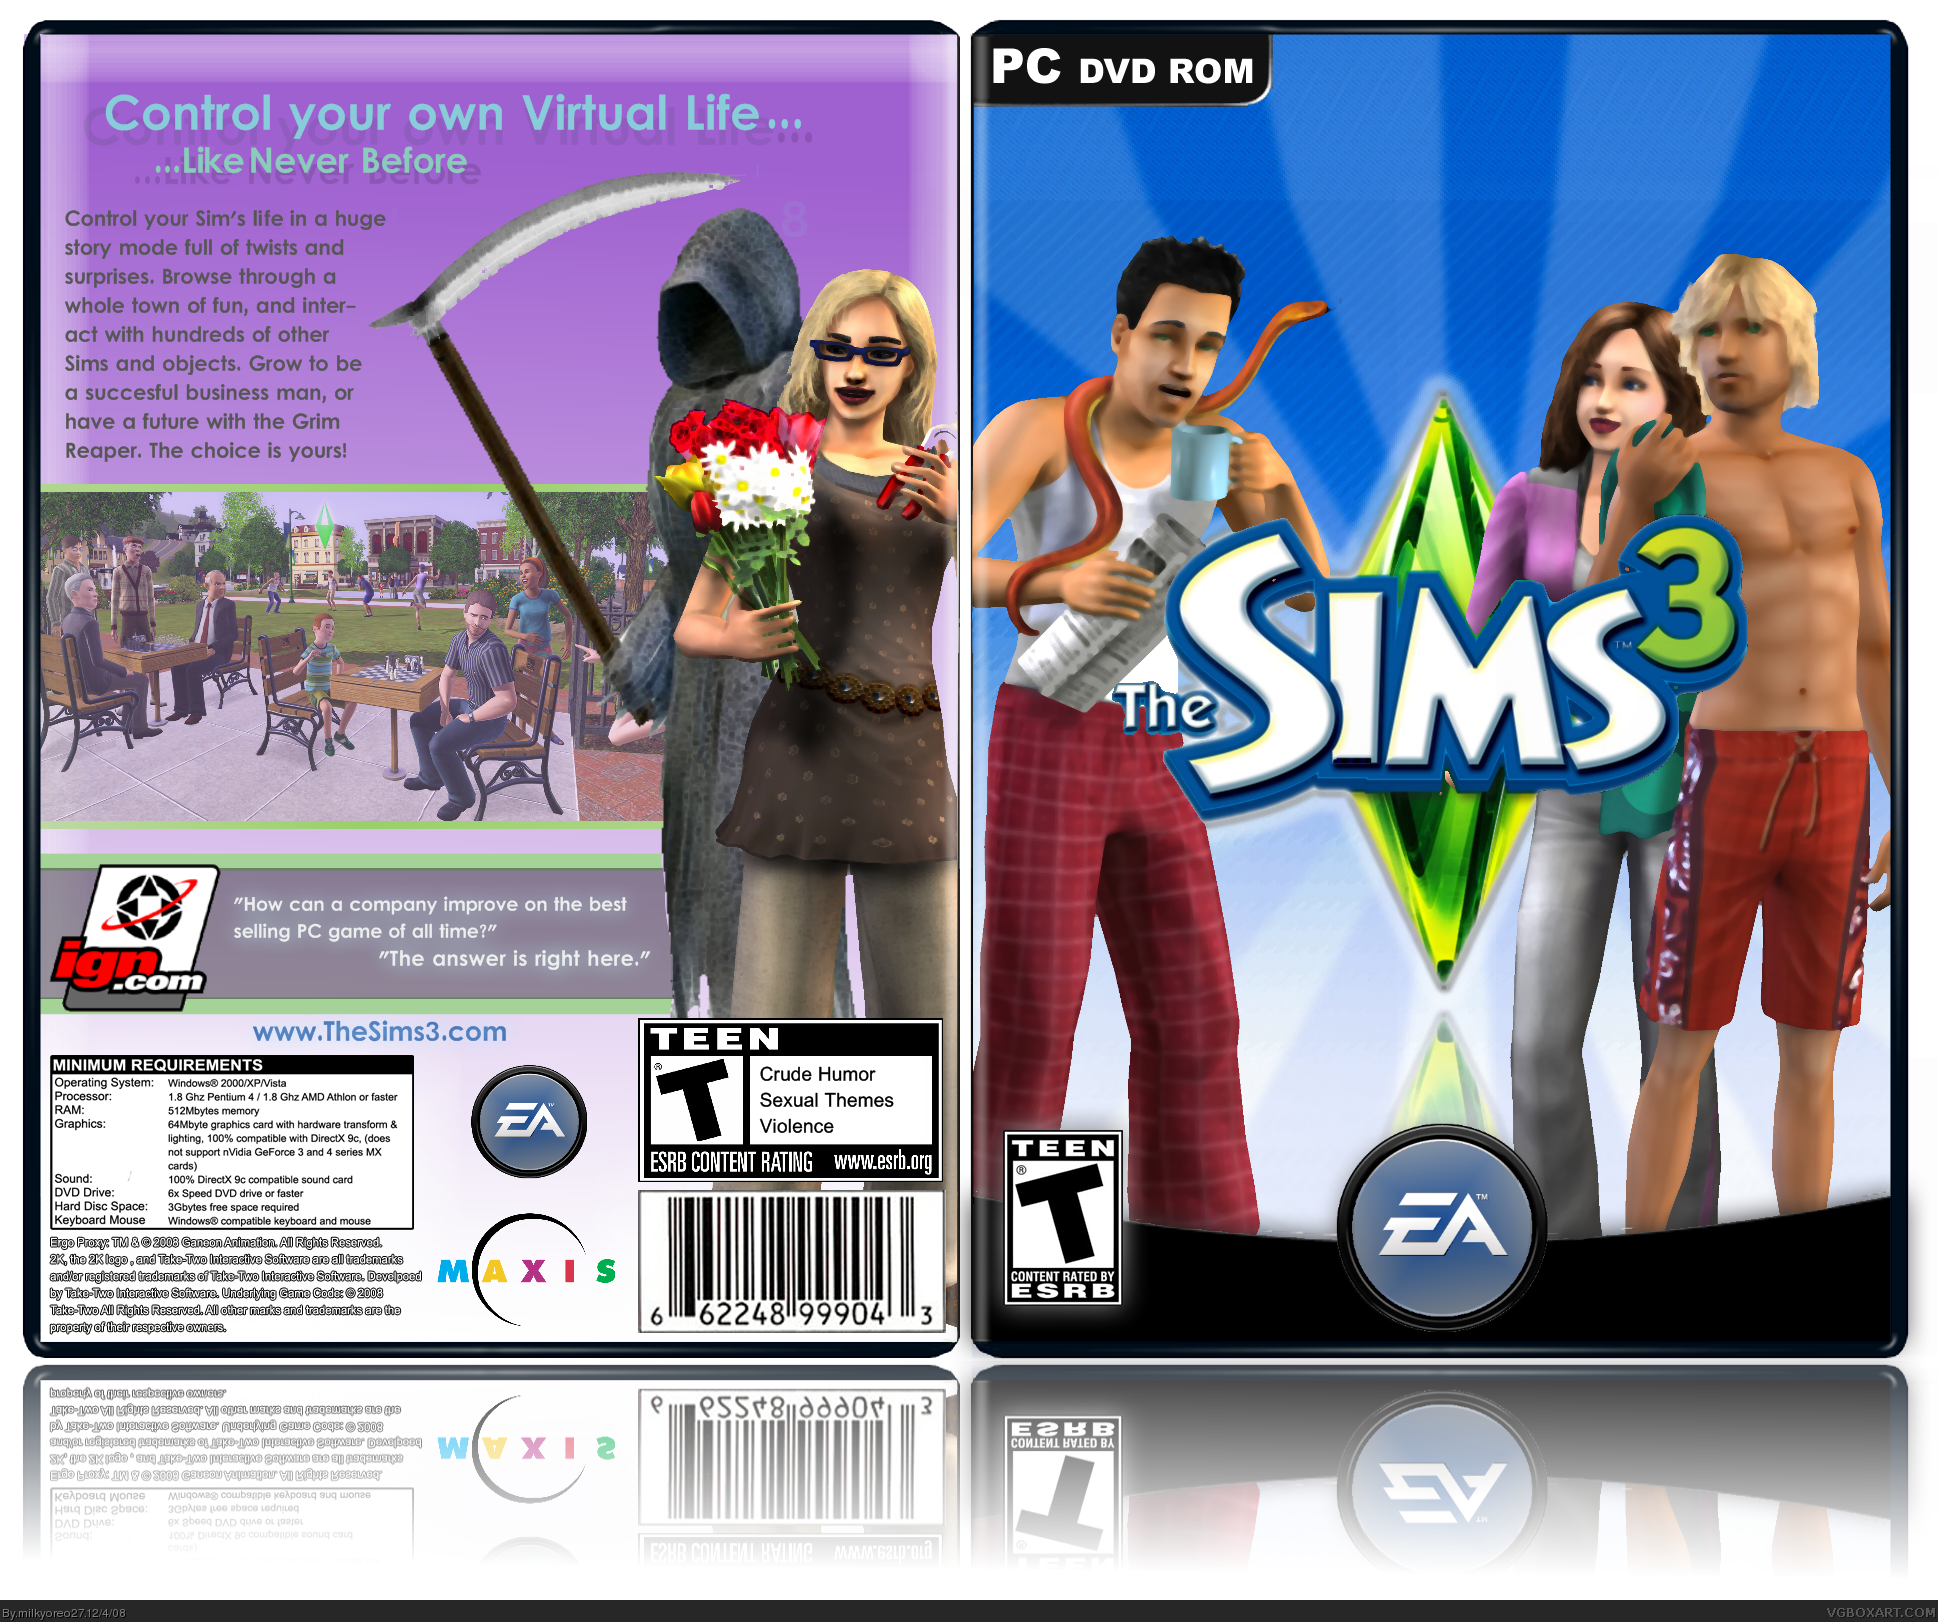 Sims 3 box cover